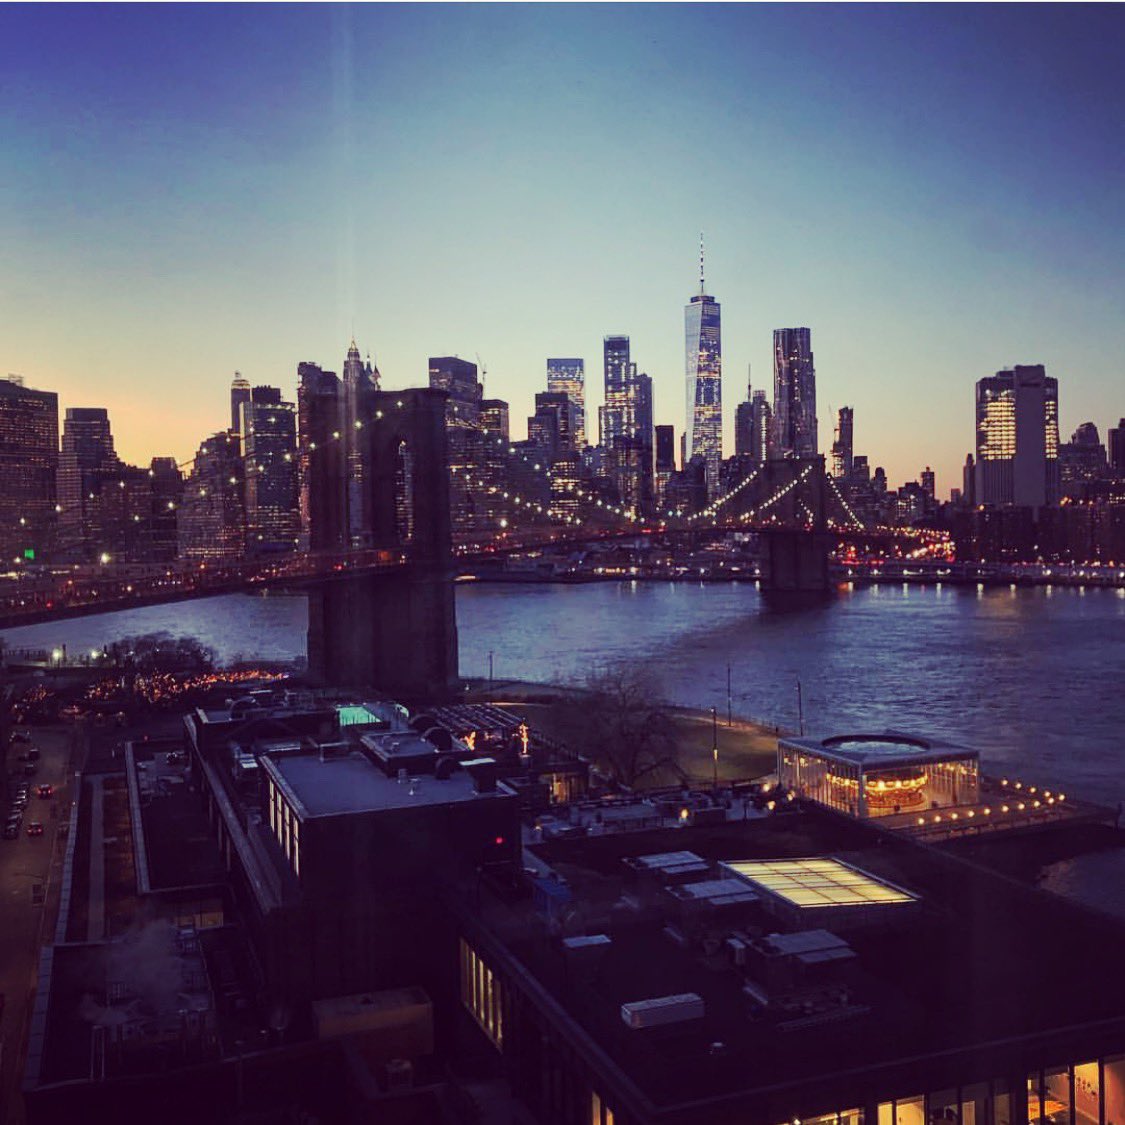 Love my new office view ????❤️
#office 
#workworkwork 
#breathtaking 
#newyorkcity 
#inspiring https://t.co/nNyGg49bqy